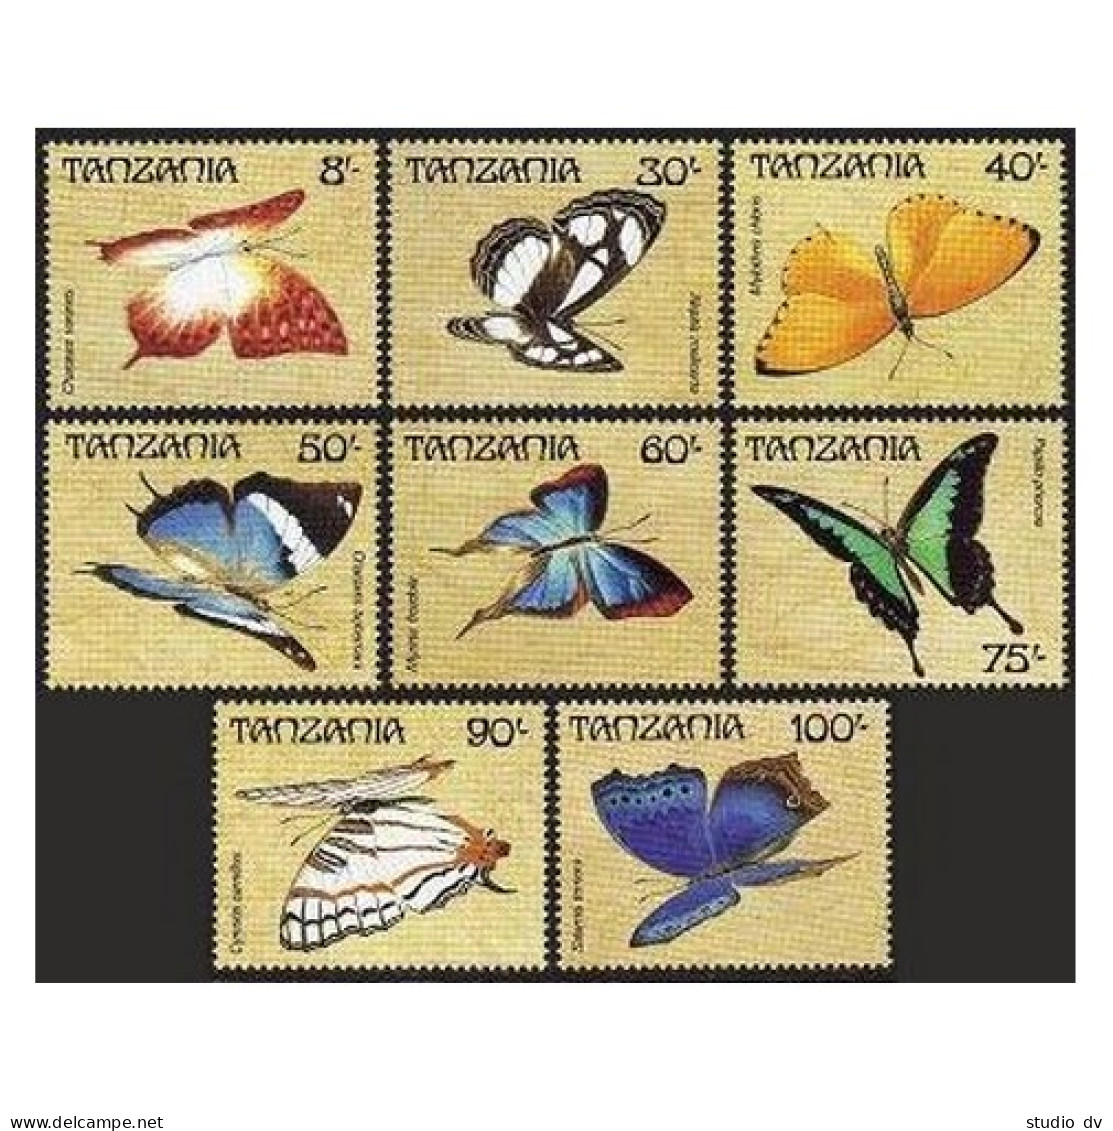 Tanzania 446-453,454-455,MNH.Michel 498-505,Bl.81-82. Butterflies 1988. - Tanzanie (1964-...)